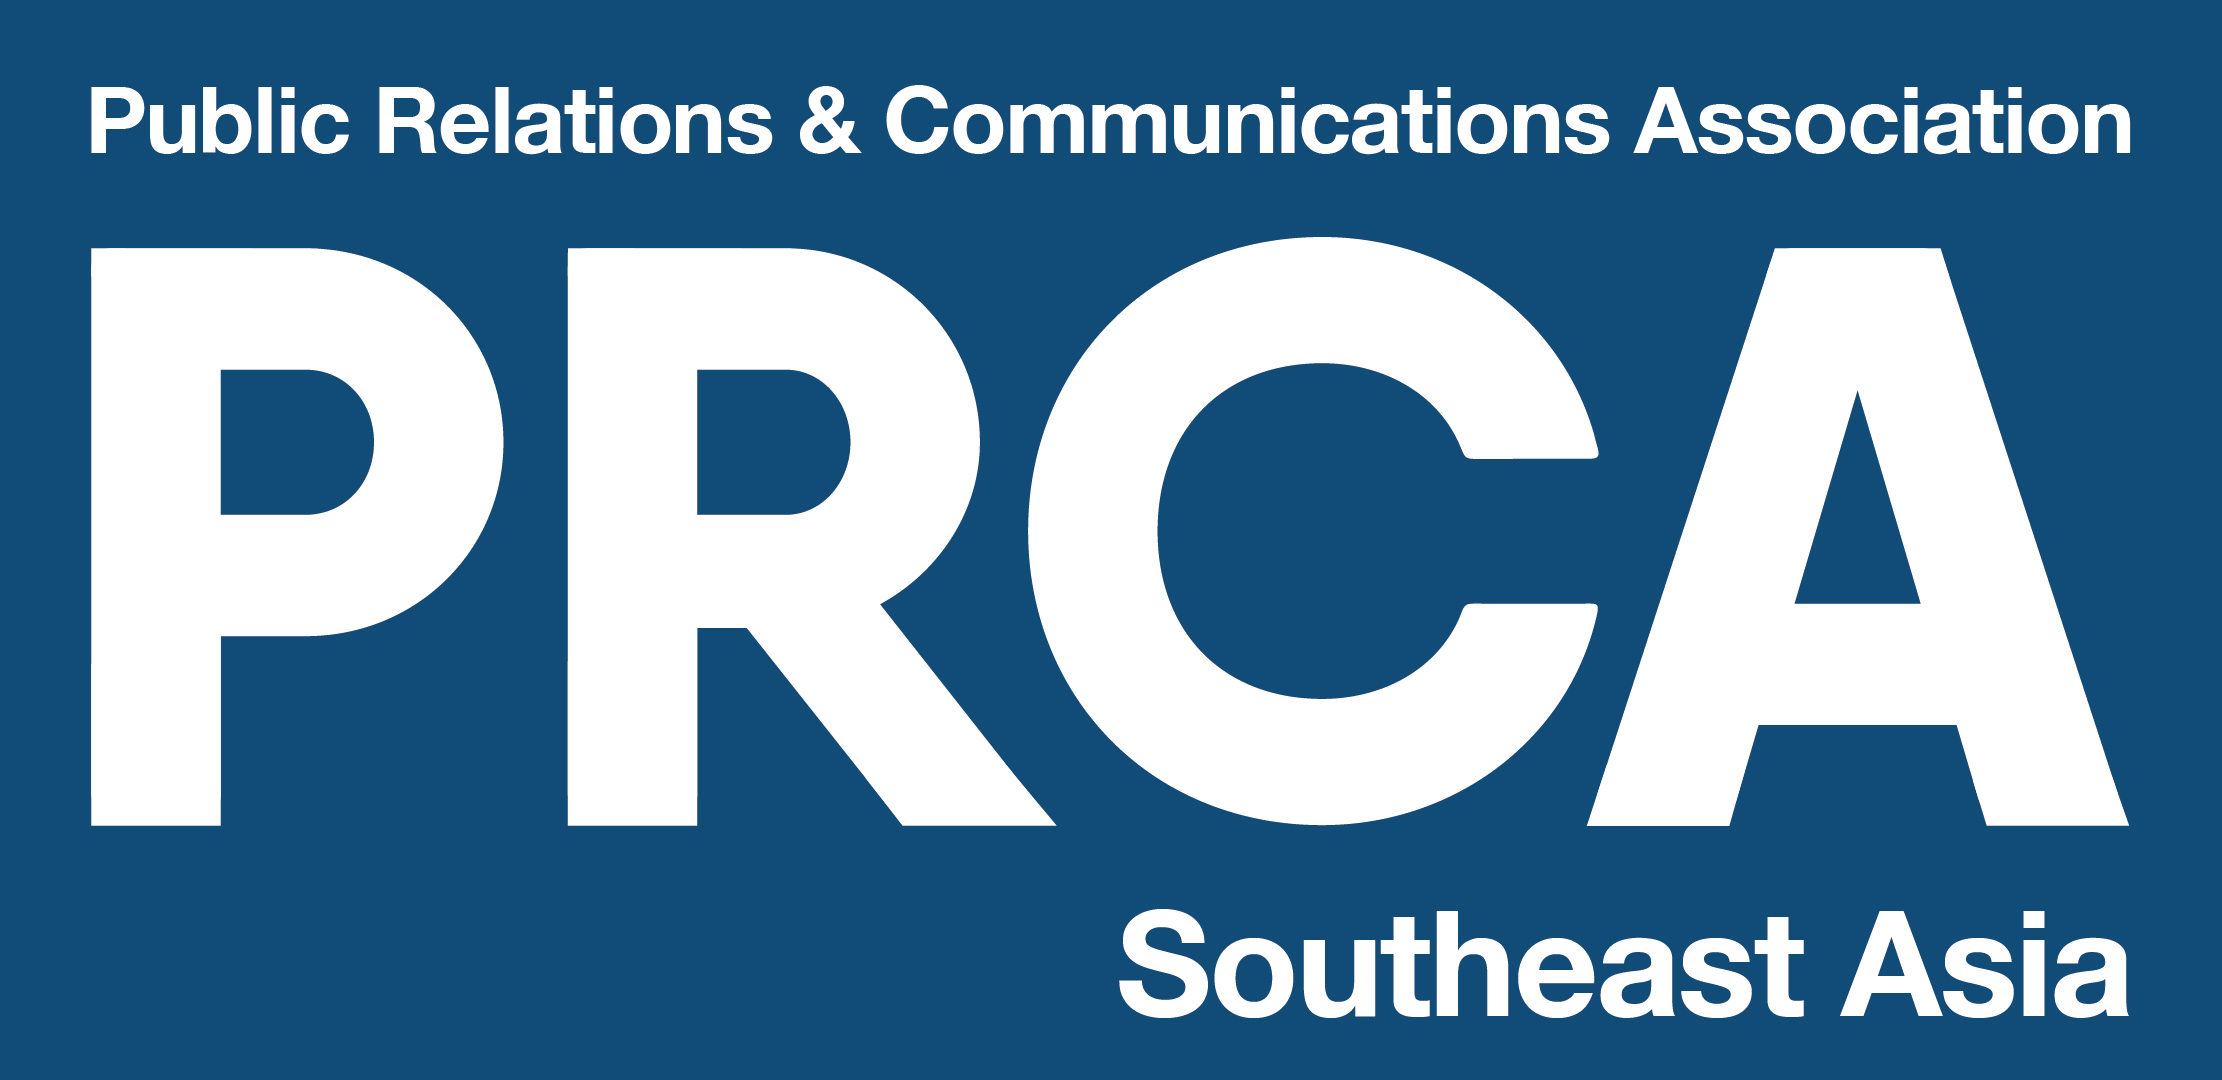 Public Relations & Communications Association South East Asia